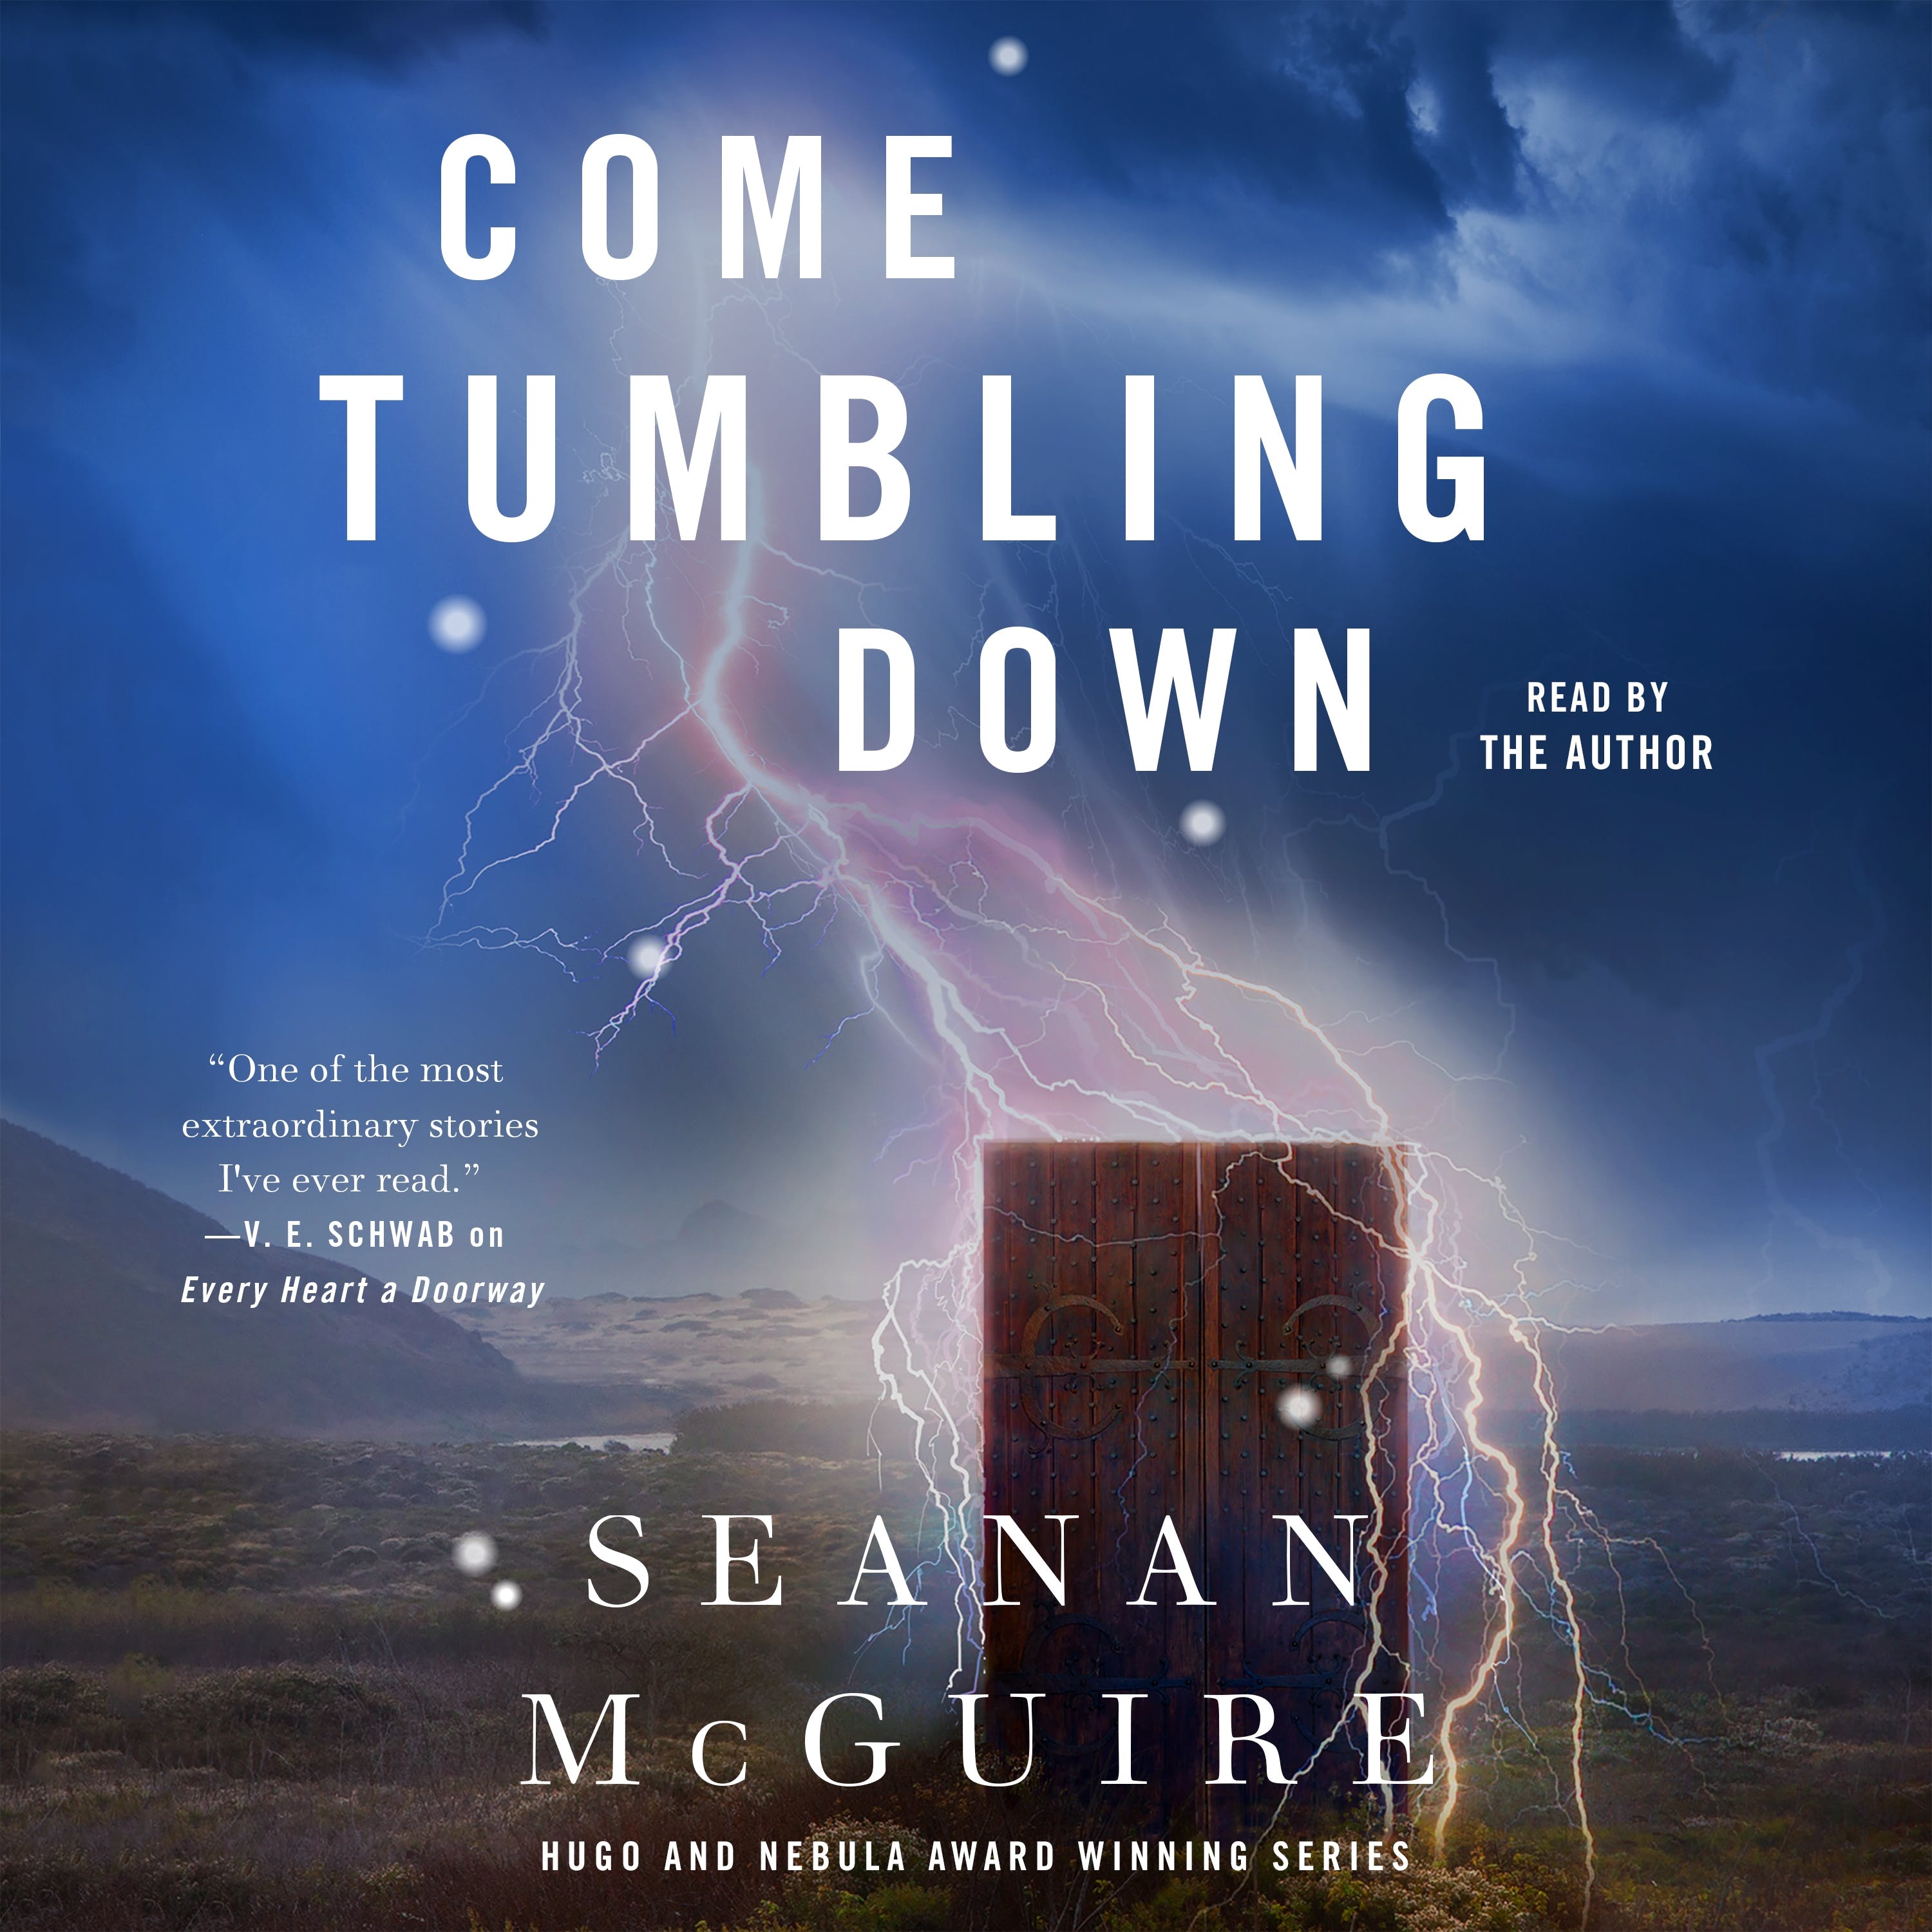 Seanan McGuire: Come Tumbling Down (AudiobookFormat)